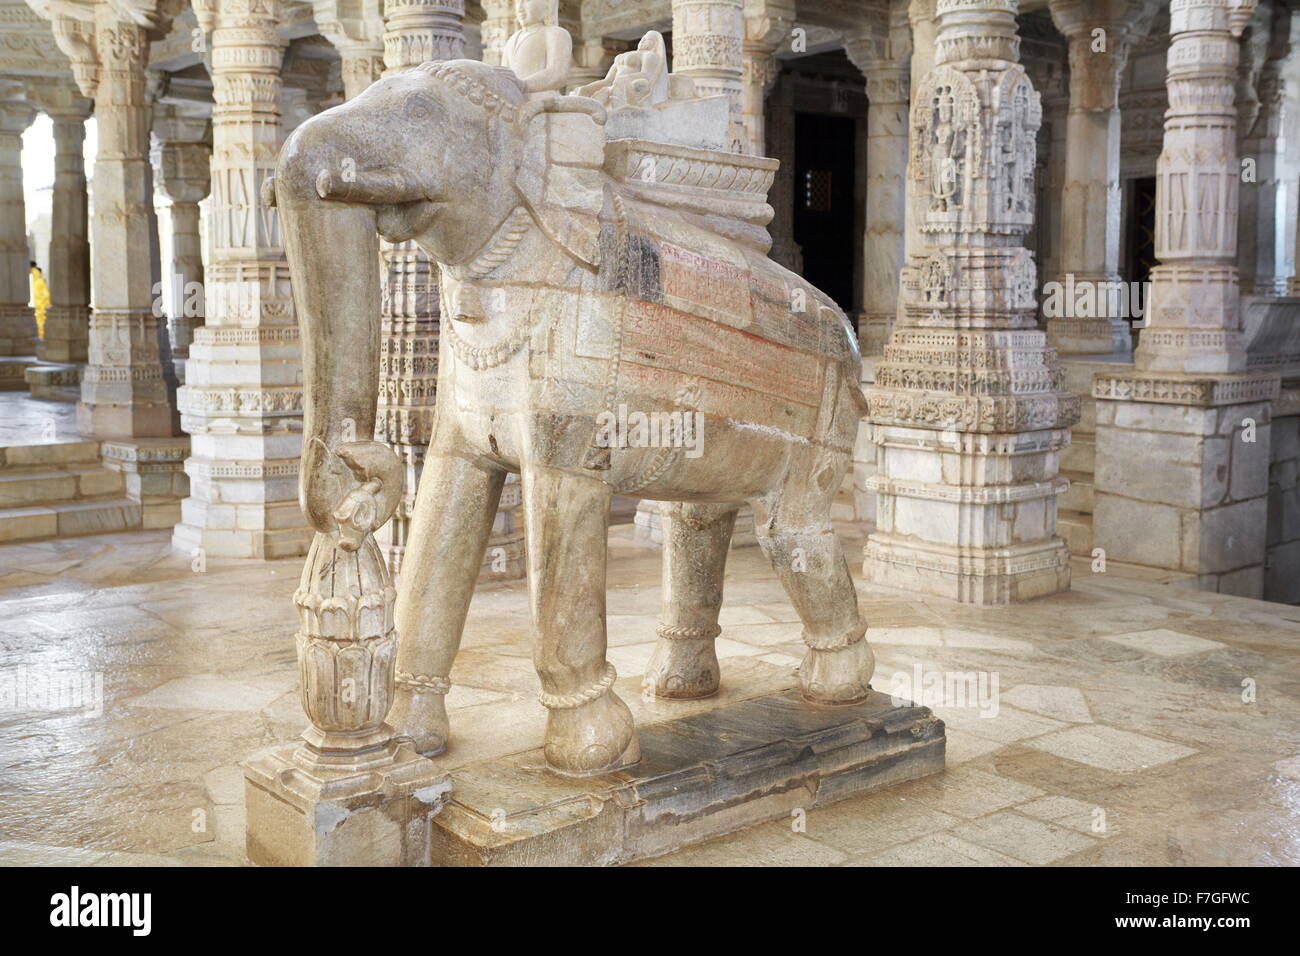 Scalpture of elephant in the Jain Temple, Ranakpur, Rajasthan, India Stock Photo